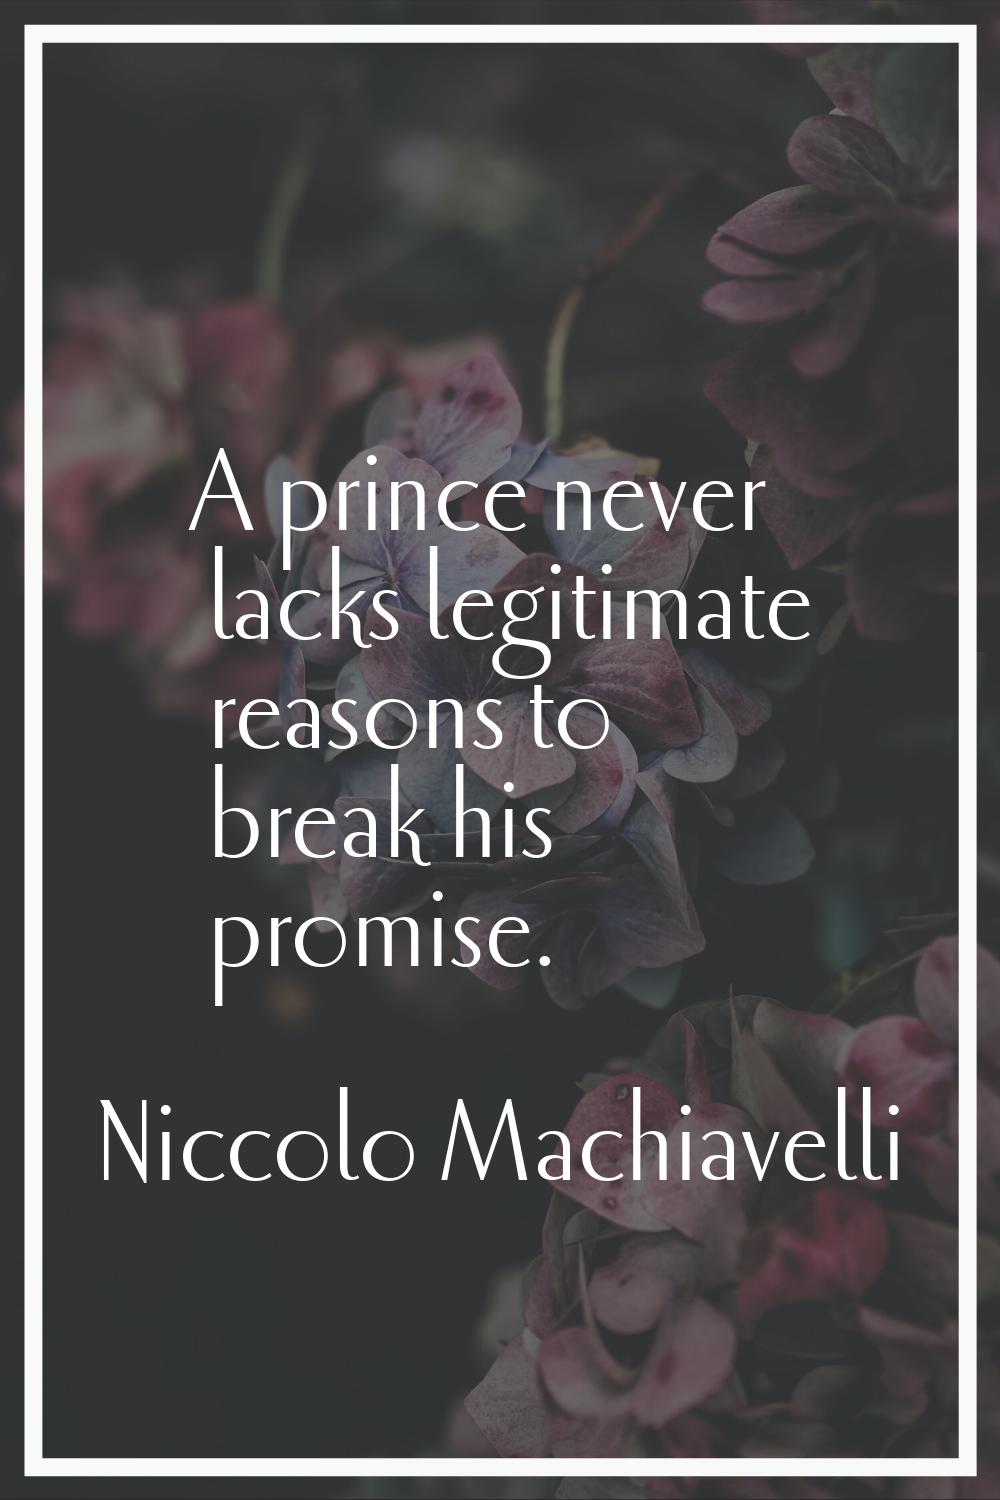 A prince never lacks legitimate reasons to break his promise.